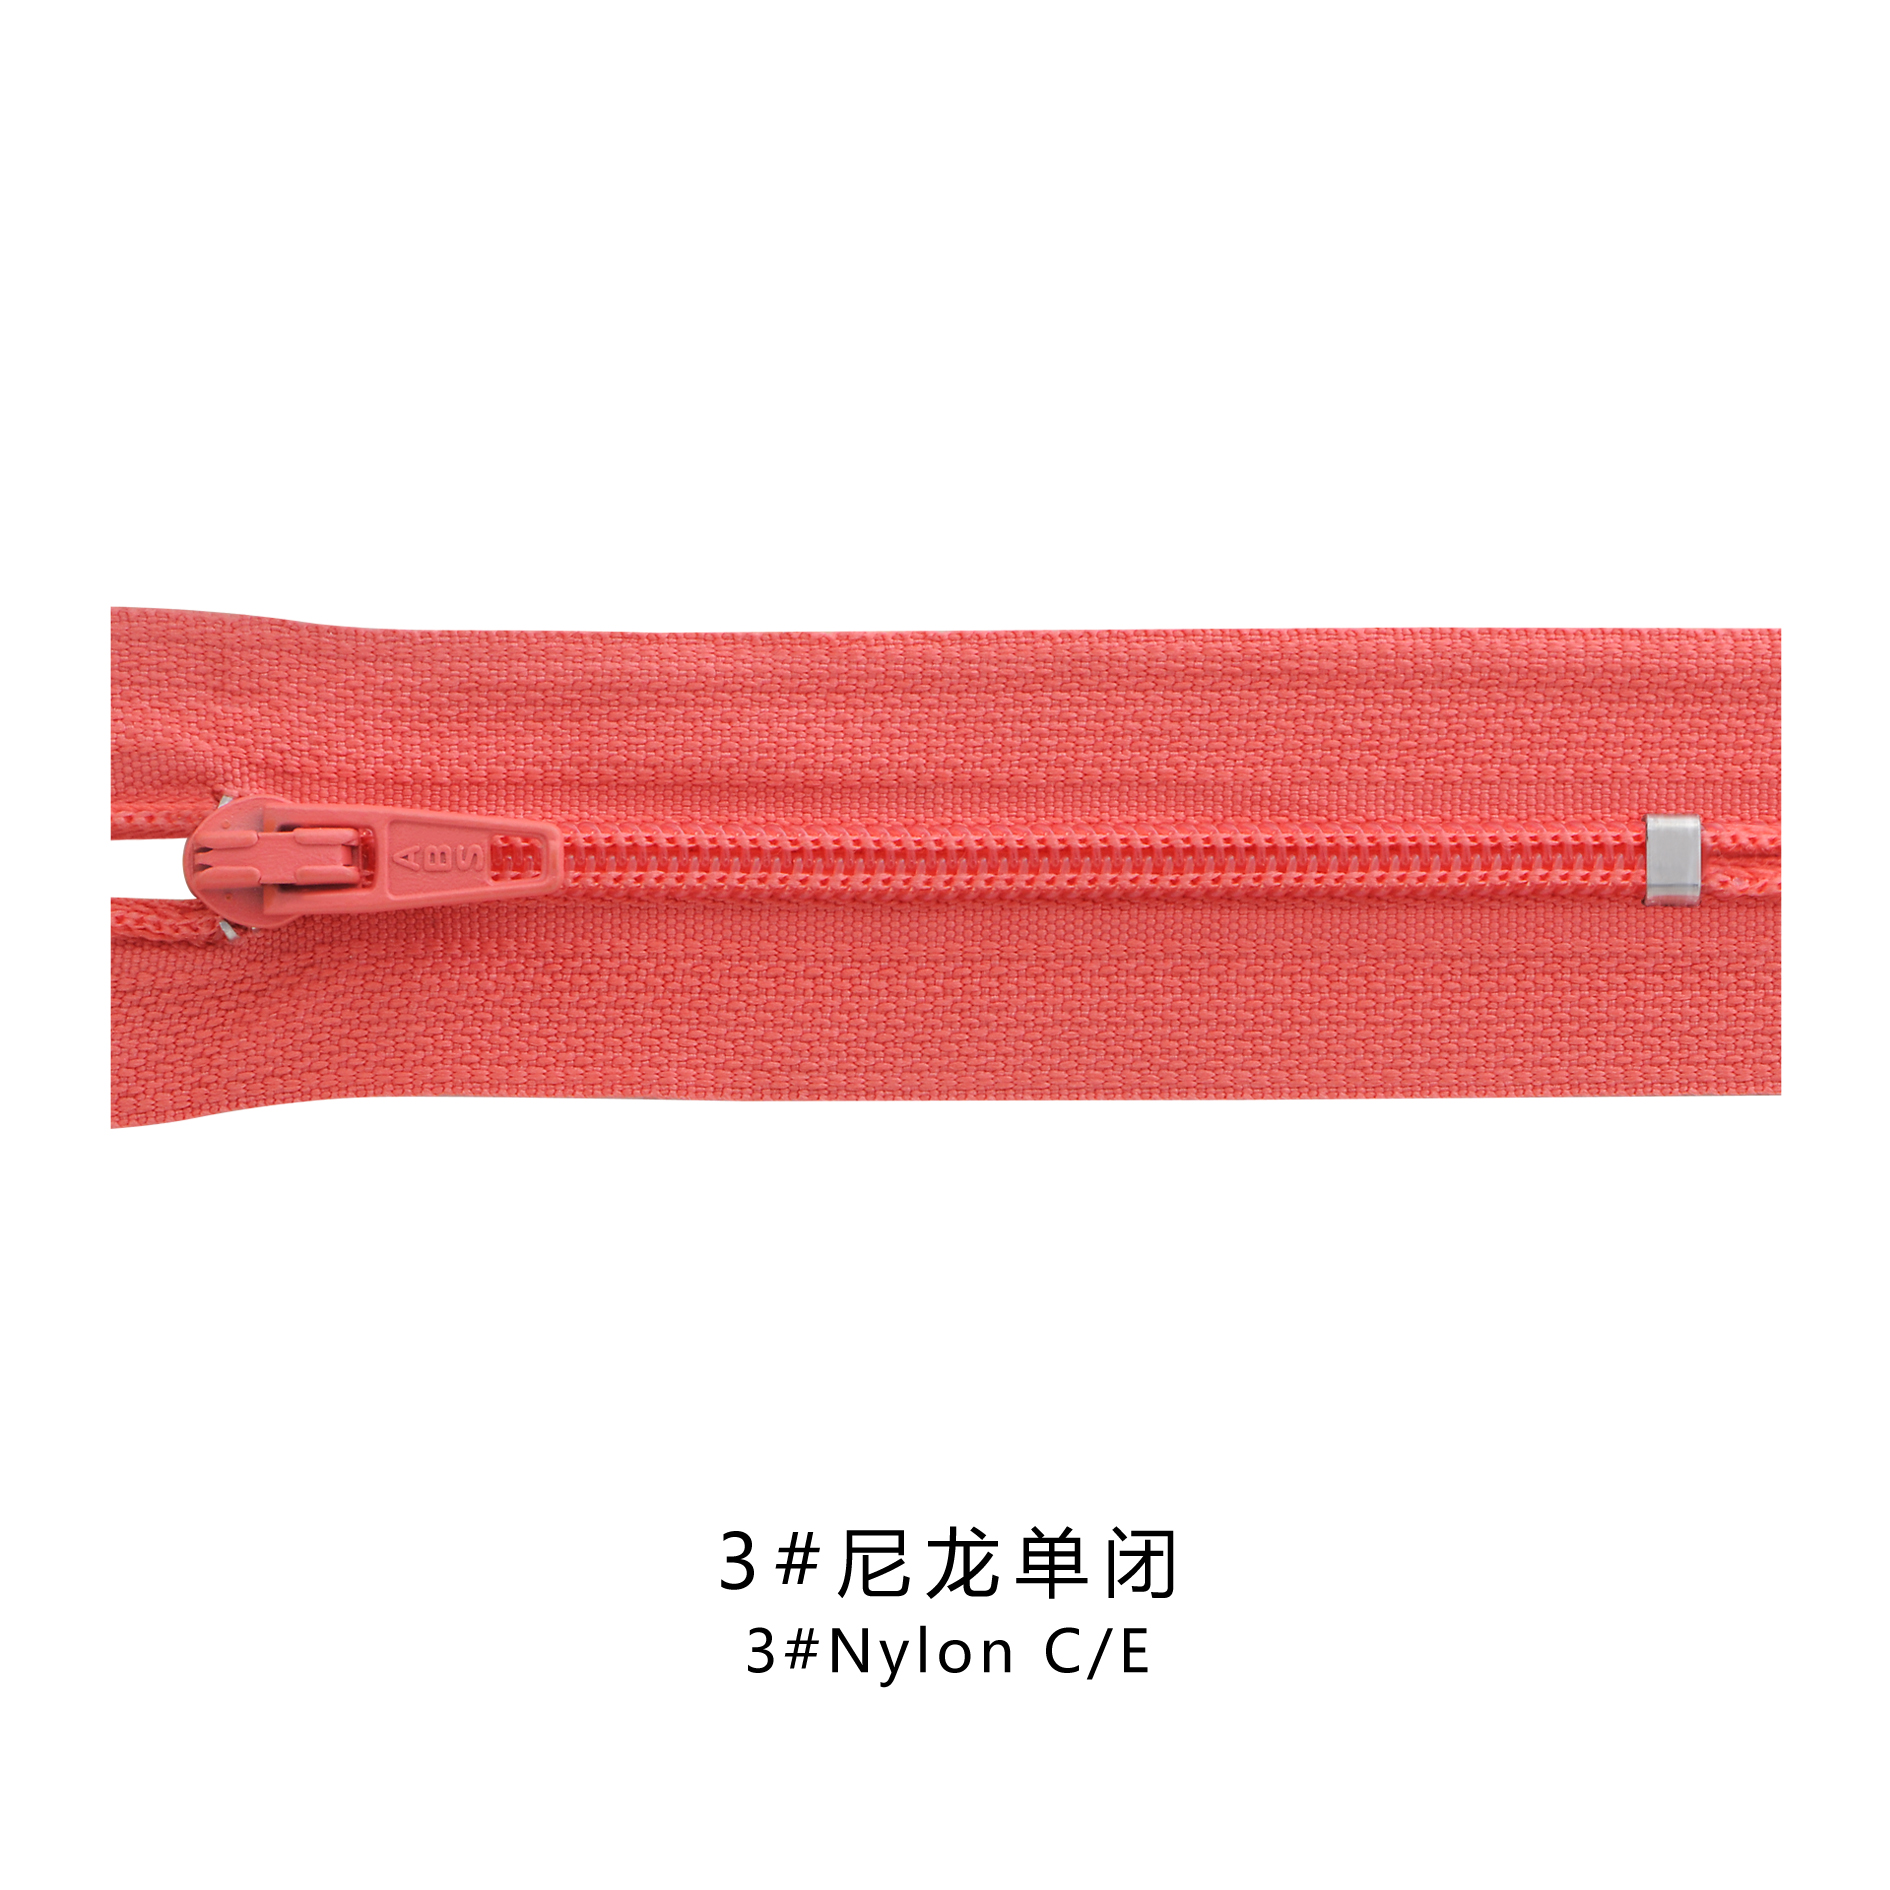 Cfc Zipper 3# nylon close end zipper Featured Image